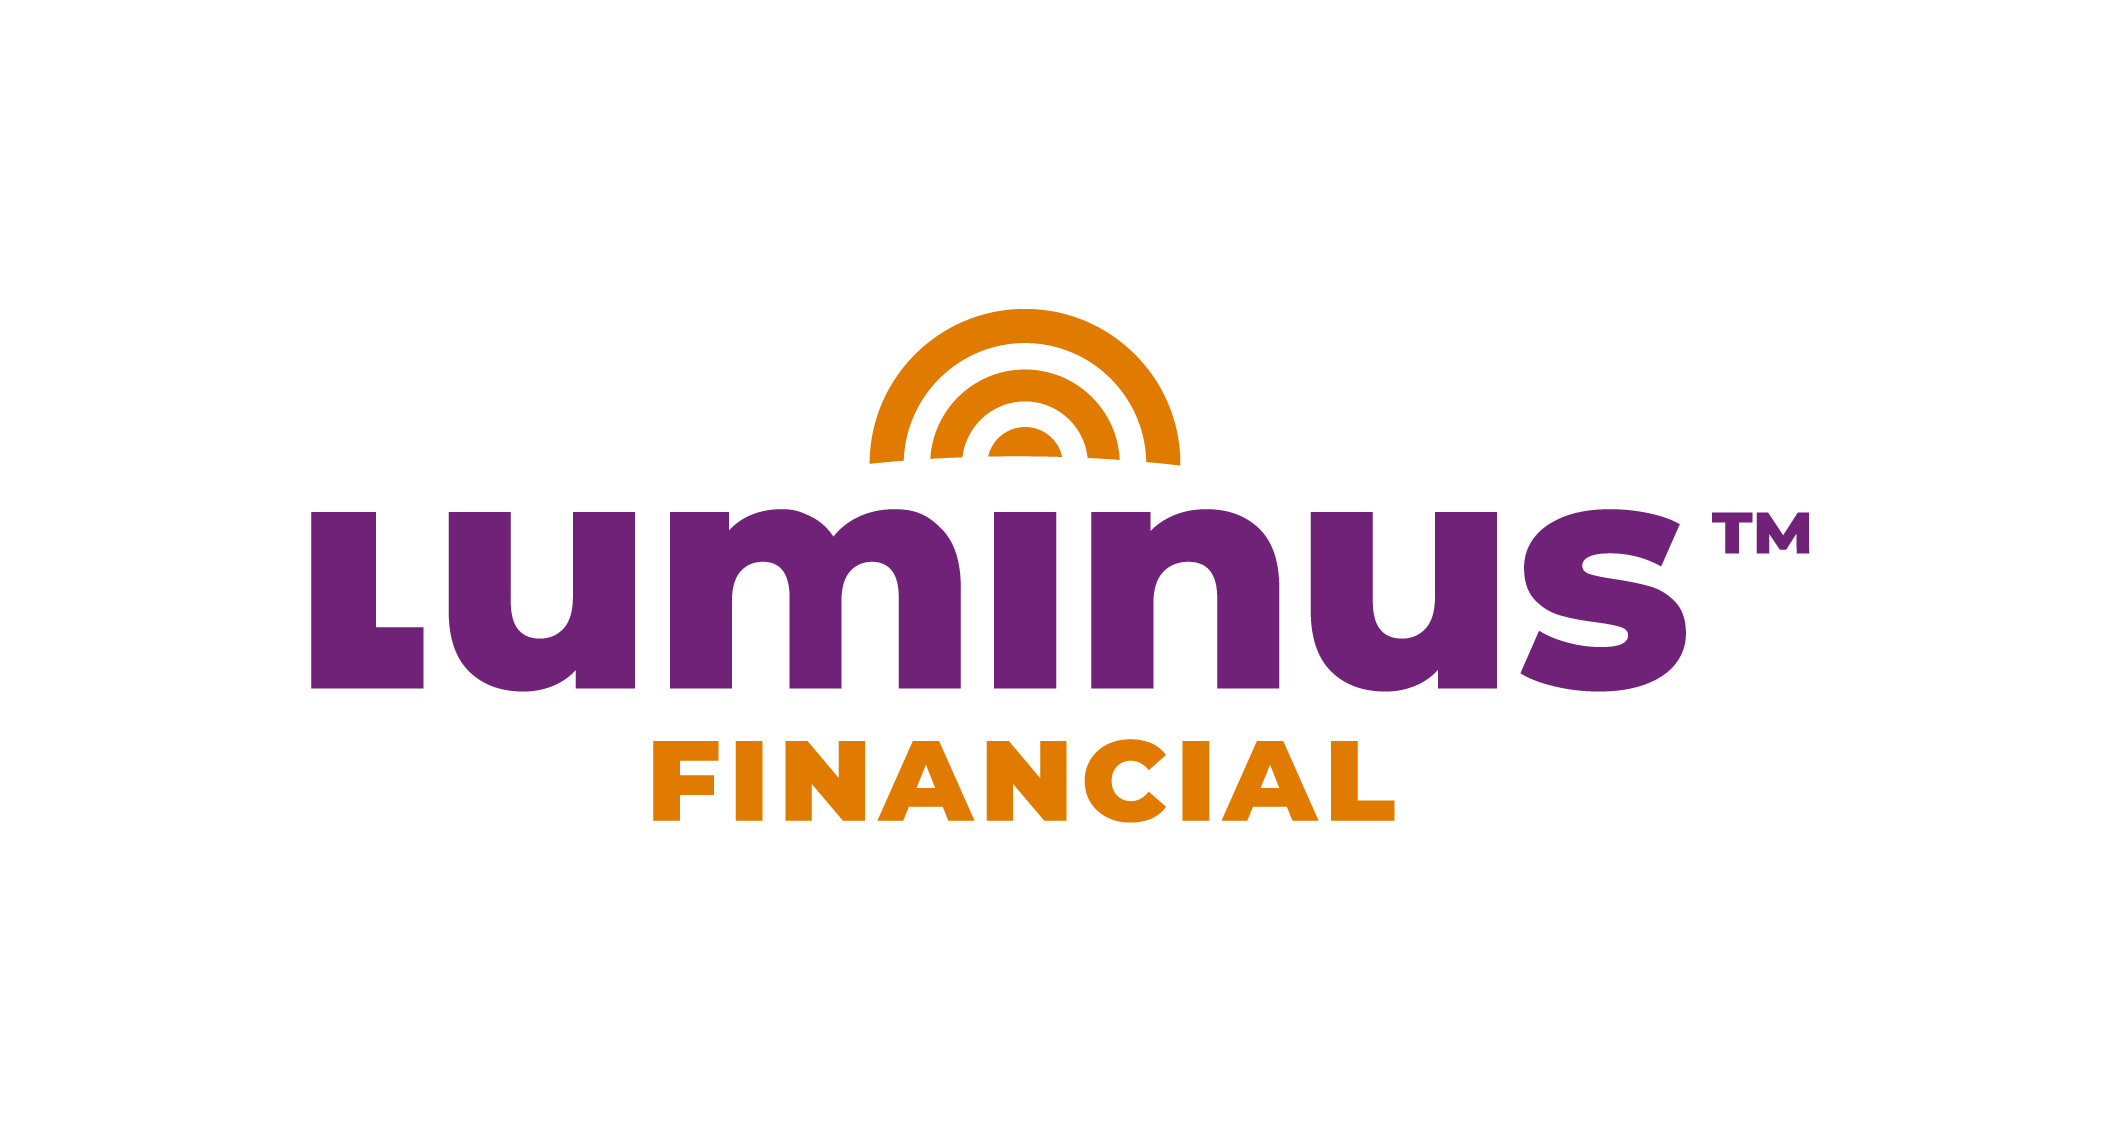 Luminus Financial